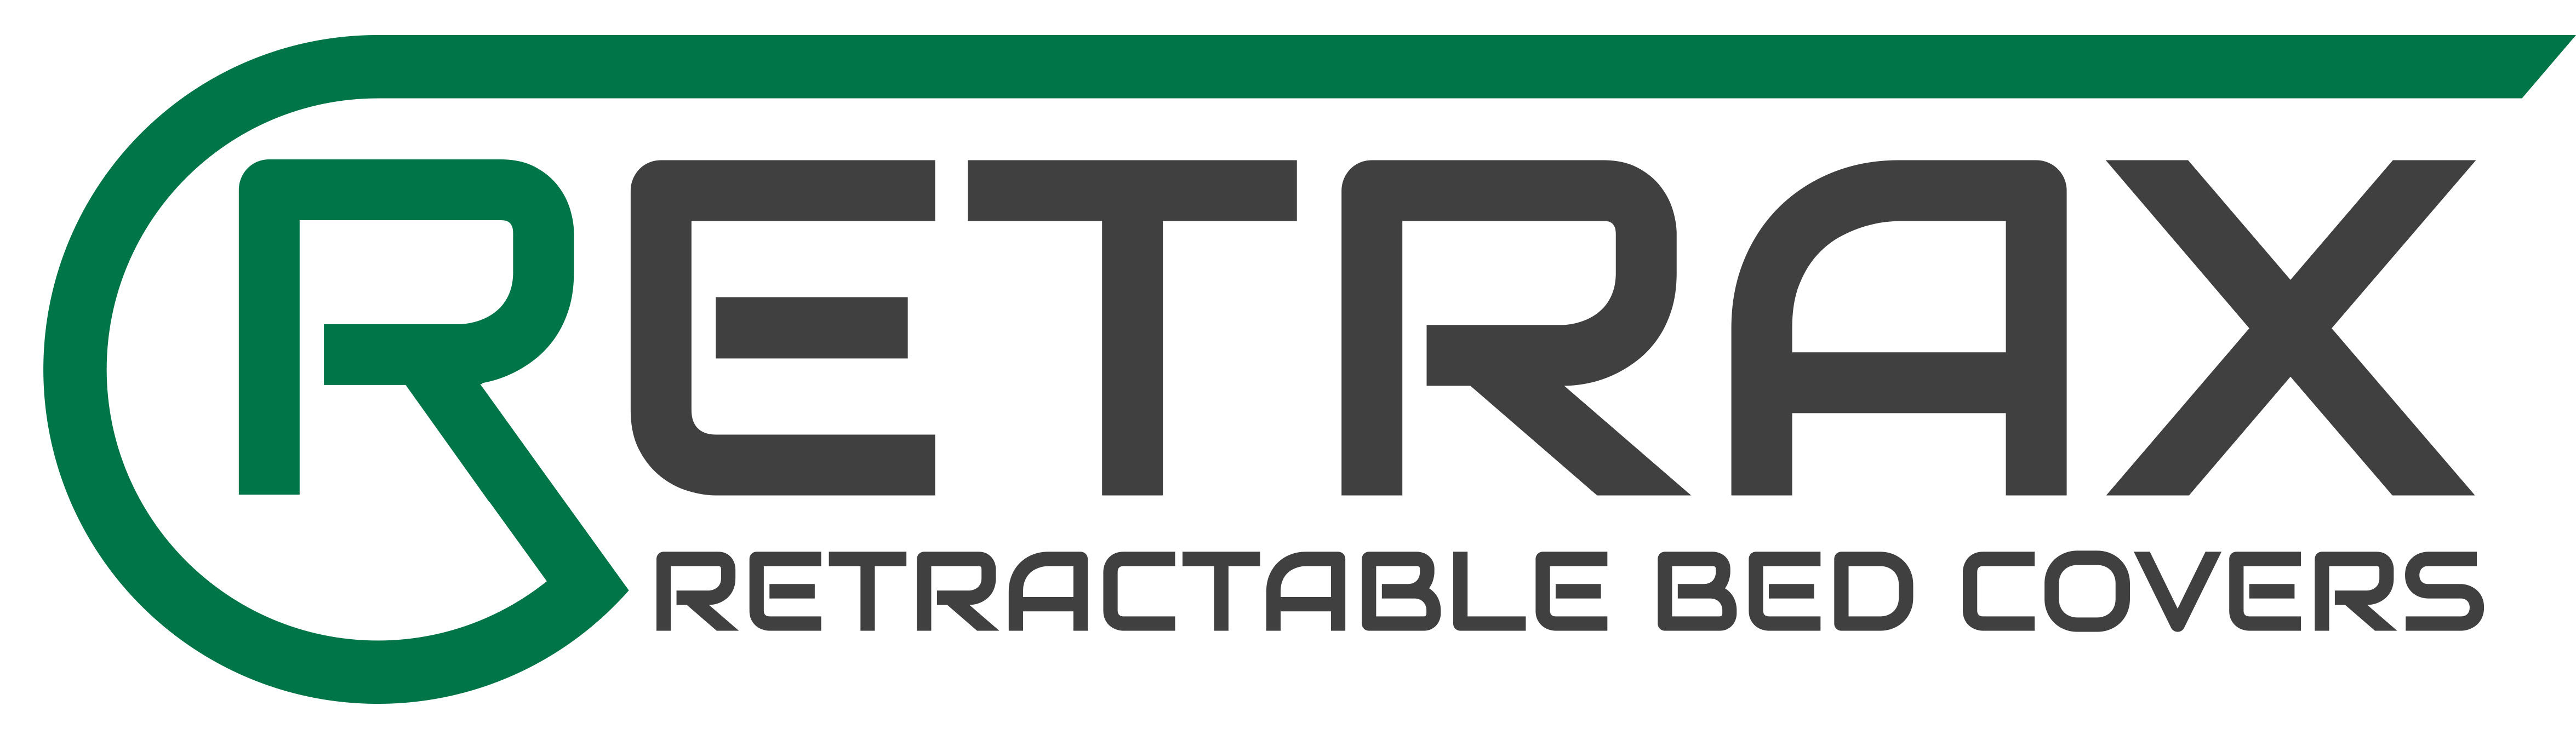 retrax-cover-logo.jpg